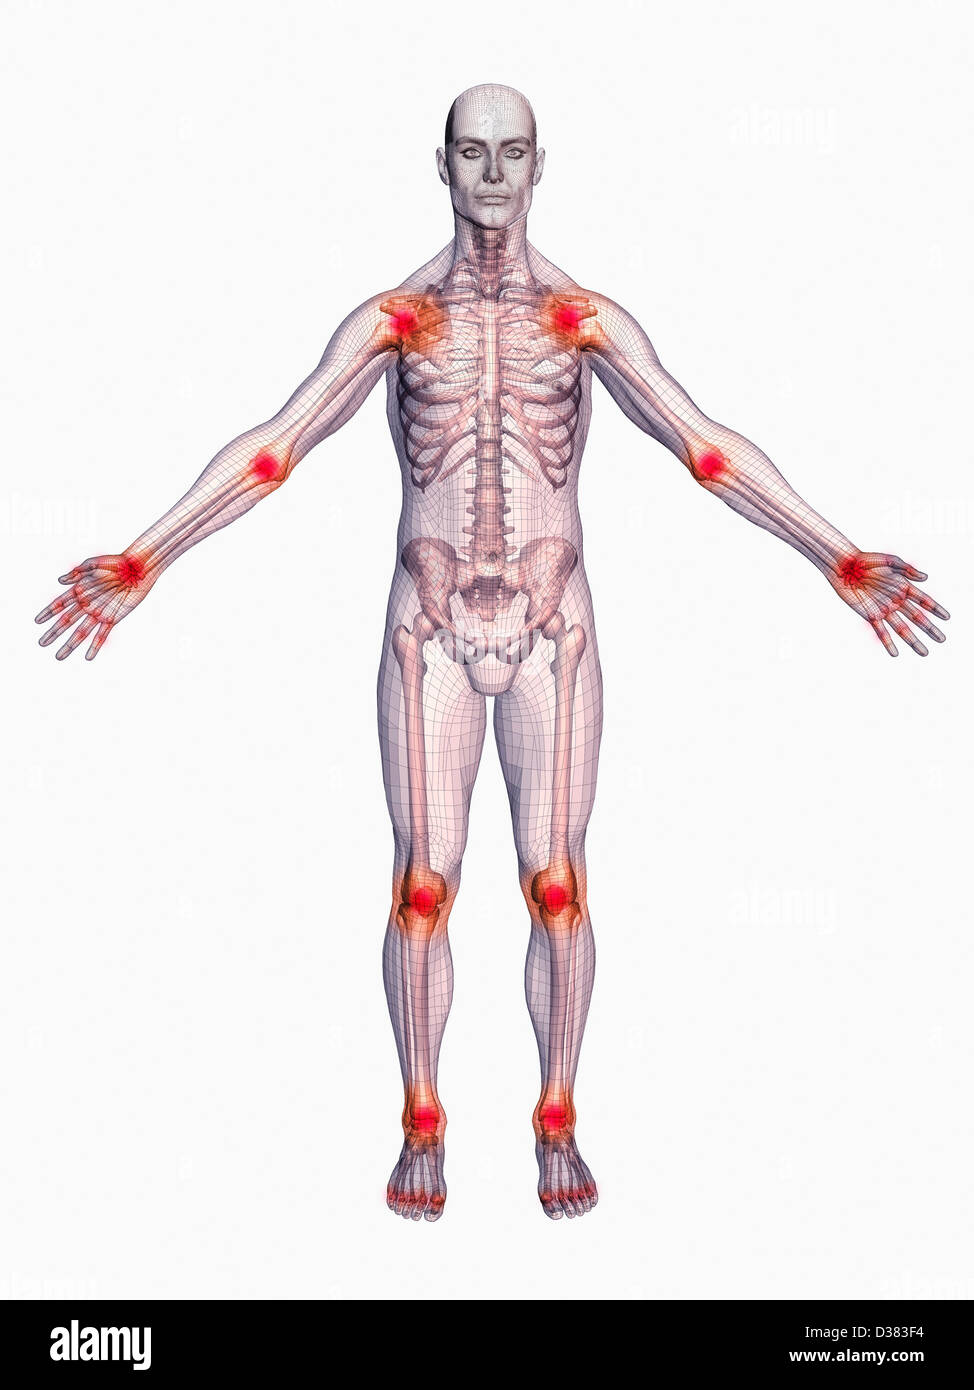 Body Parts Diagram Male / Male Human Anatomy Body Internal Organs